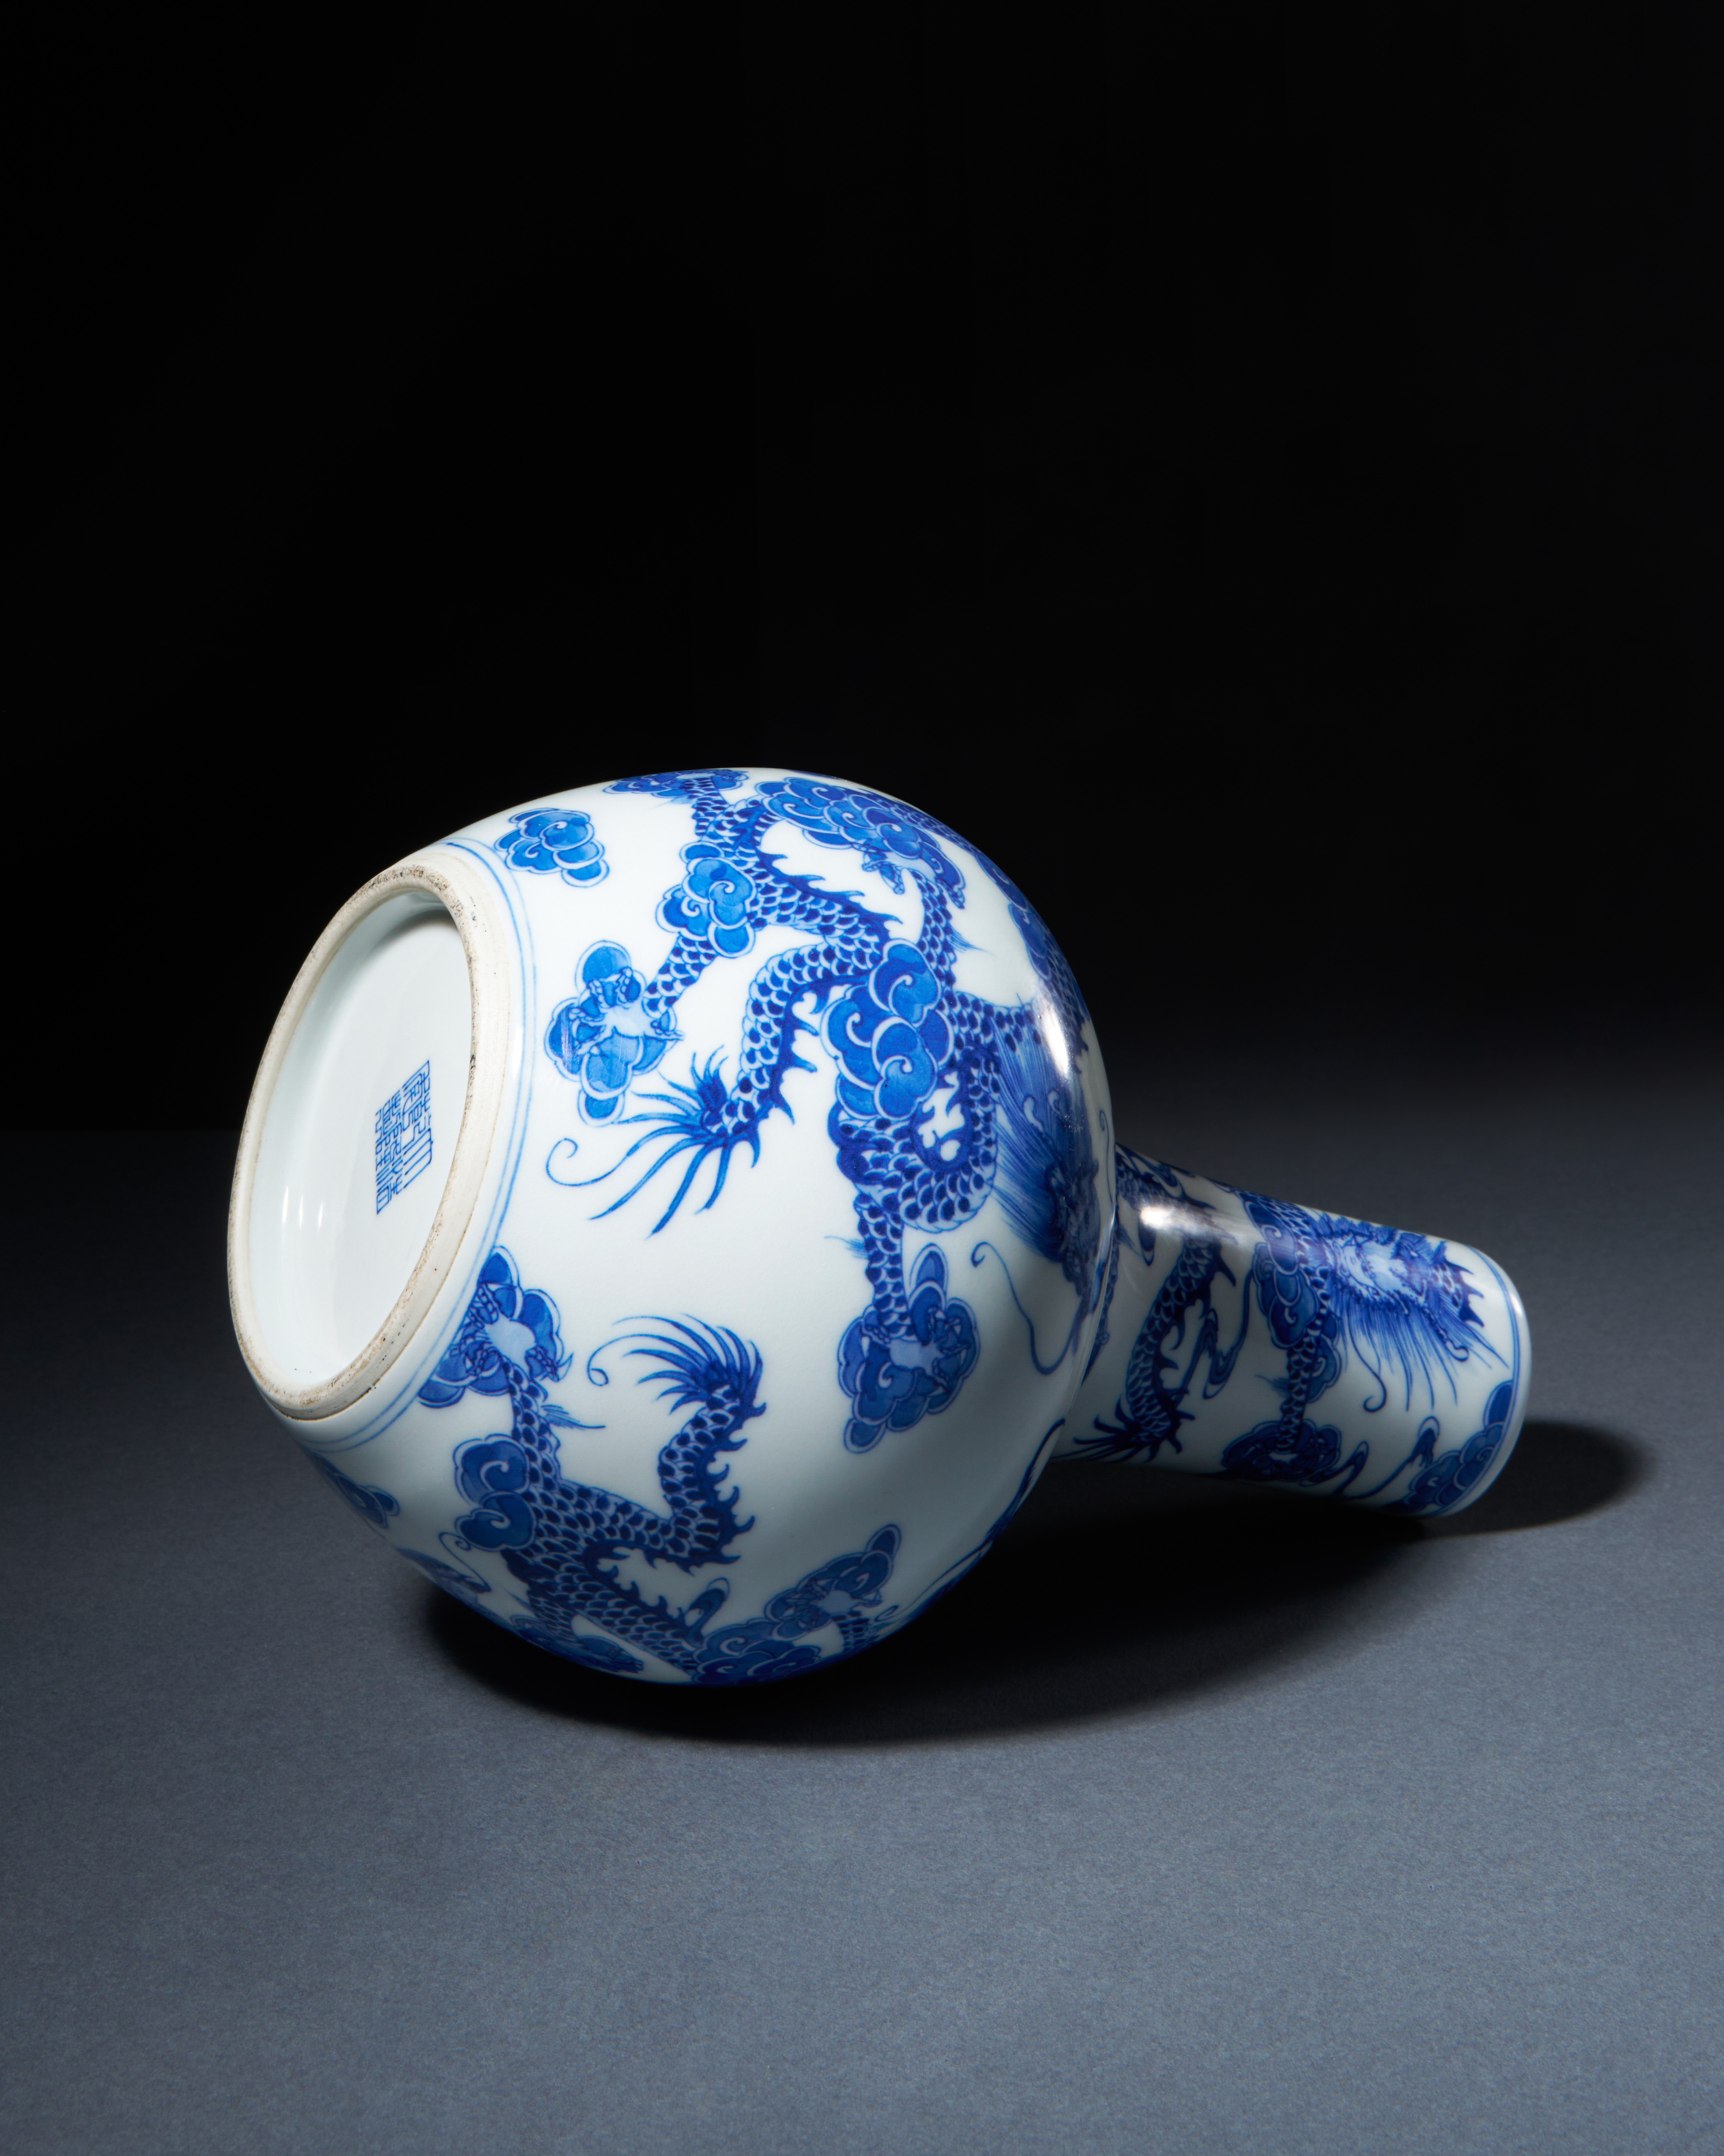 A CHINESE BLUE & WHITE BOTTLE VASE, QING DYNASTY (1644-1911) - Image 5 of 6